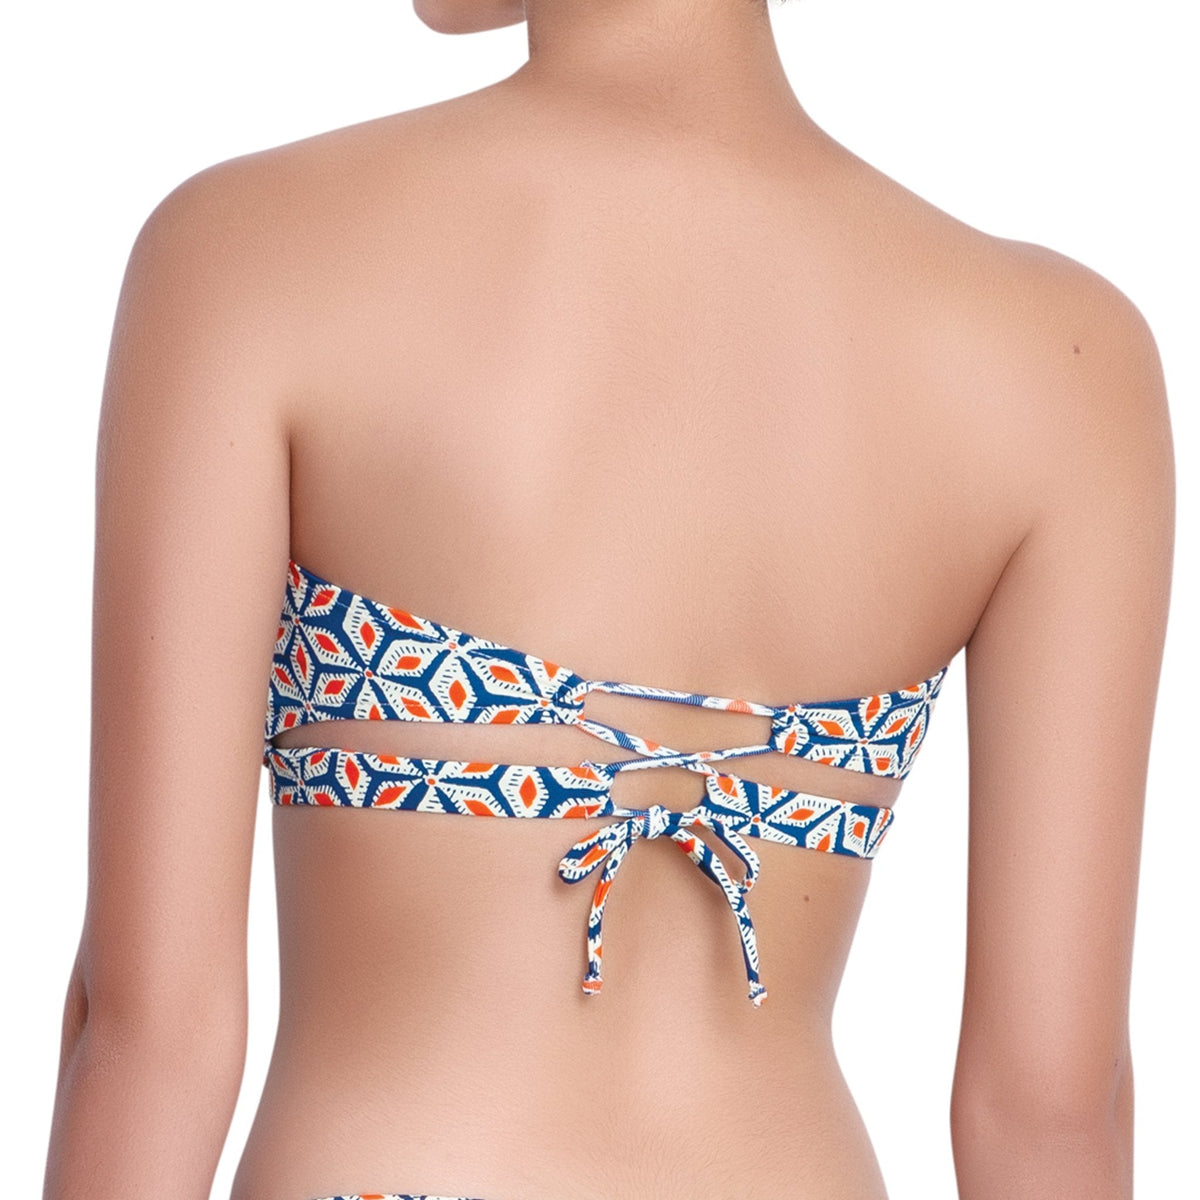 B√âR√âNICE bandeau bra, printed bikini top by ALMA swimwear ‚Äì back view 